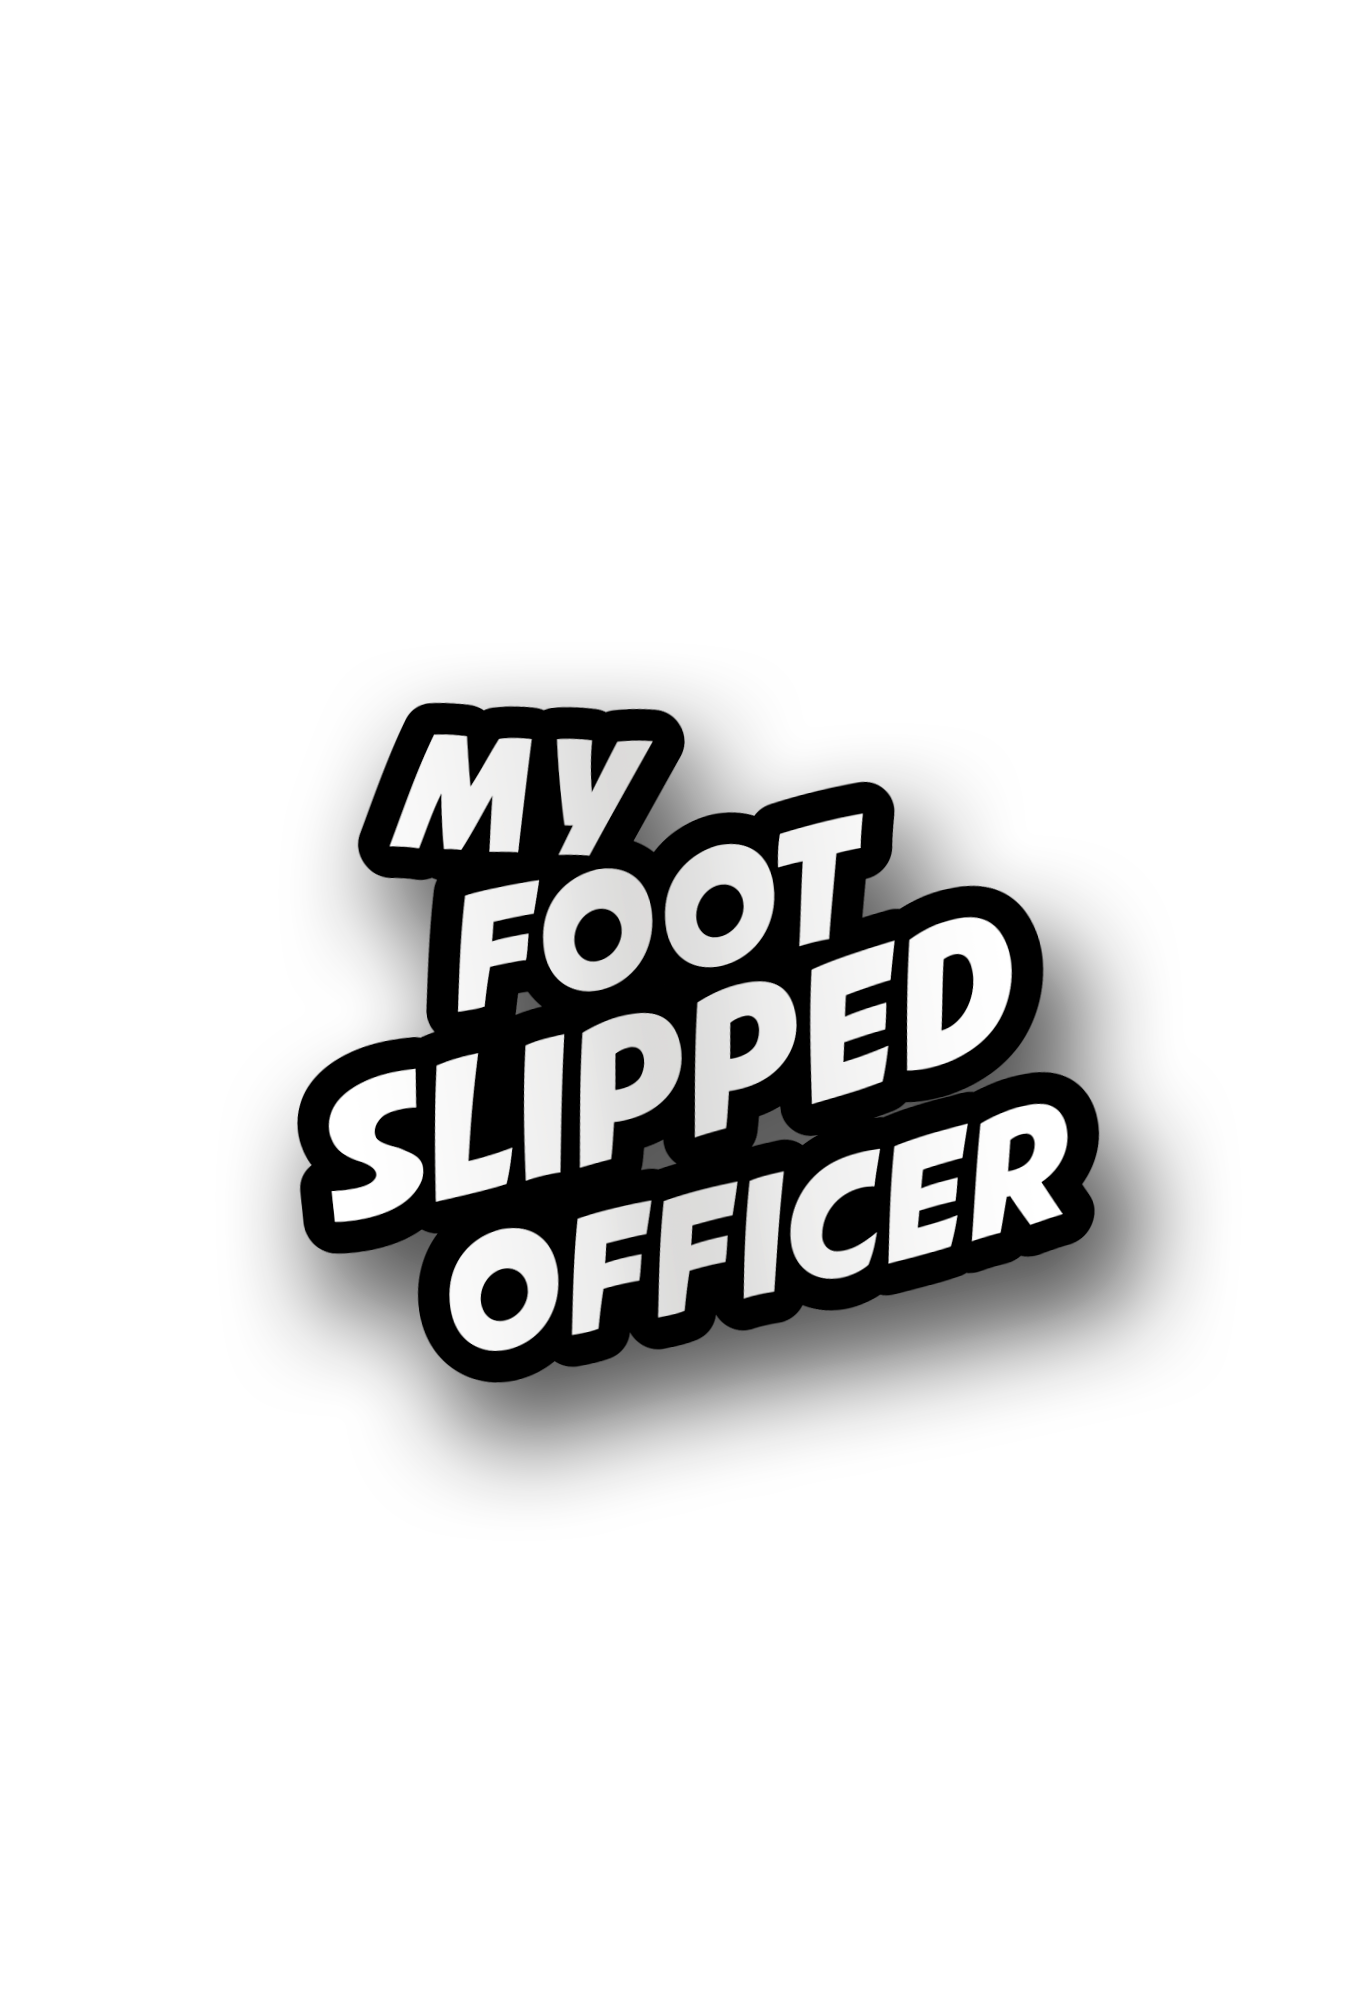 ''My foot slipped officer'' Vinyl Sticker